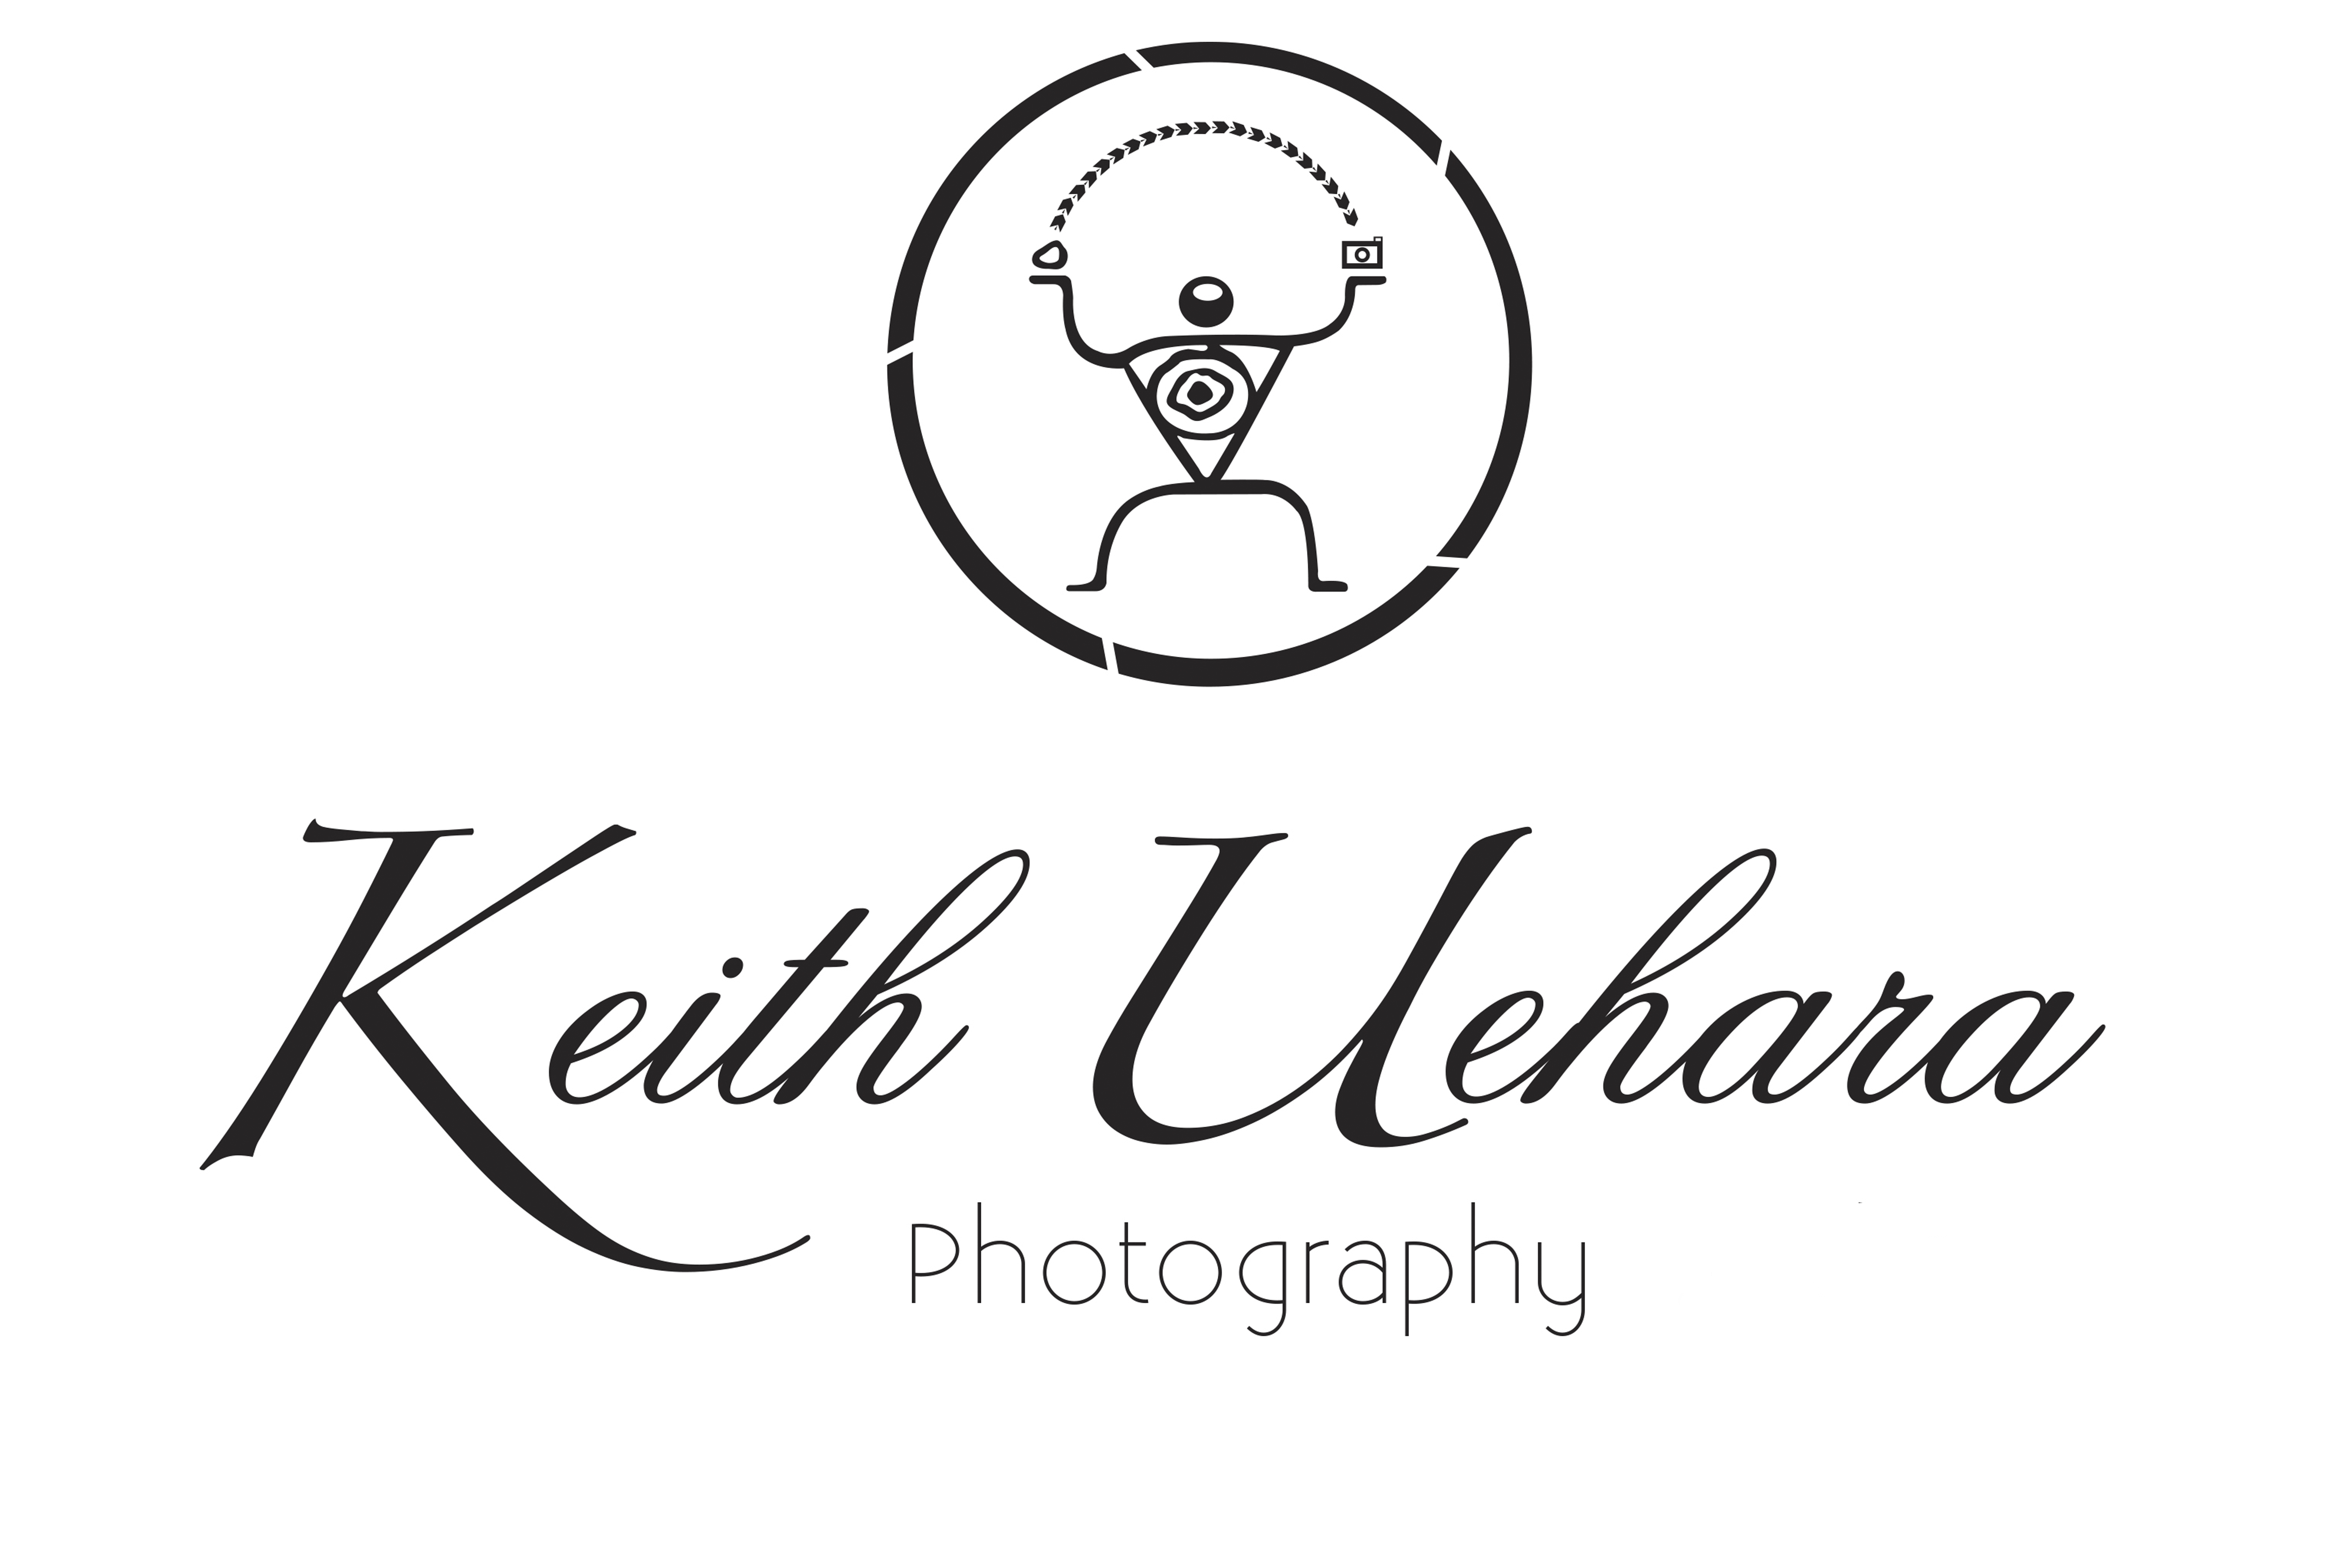 Keith Uehara Photography